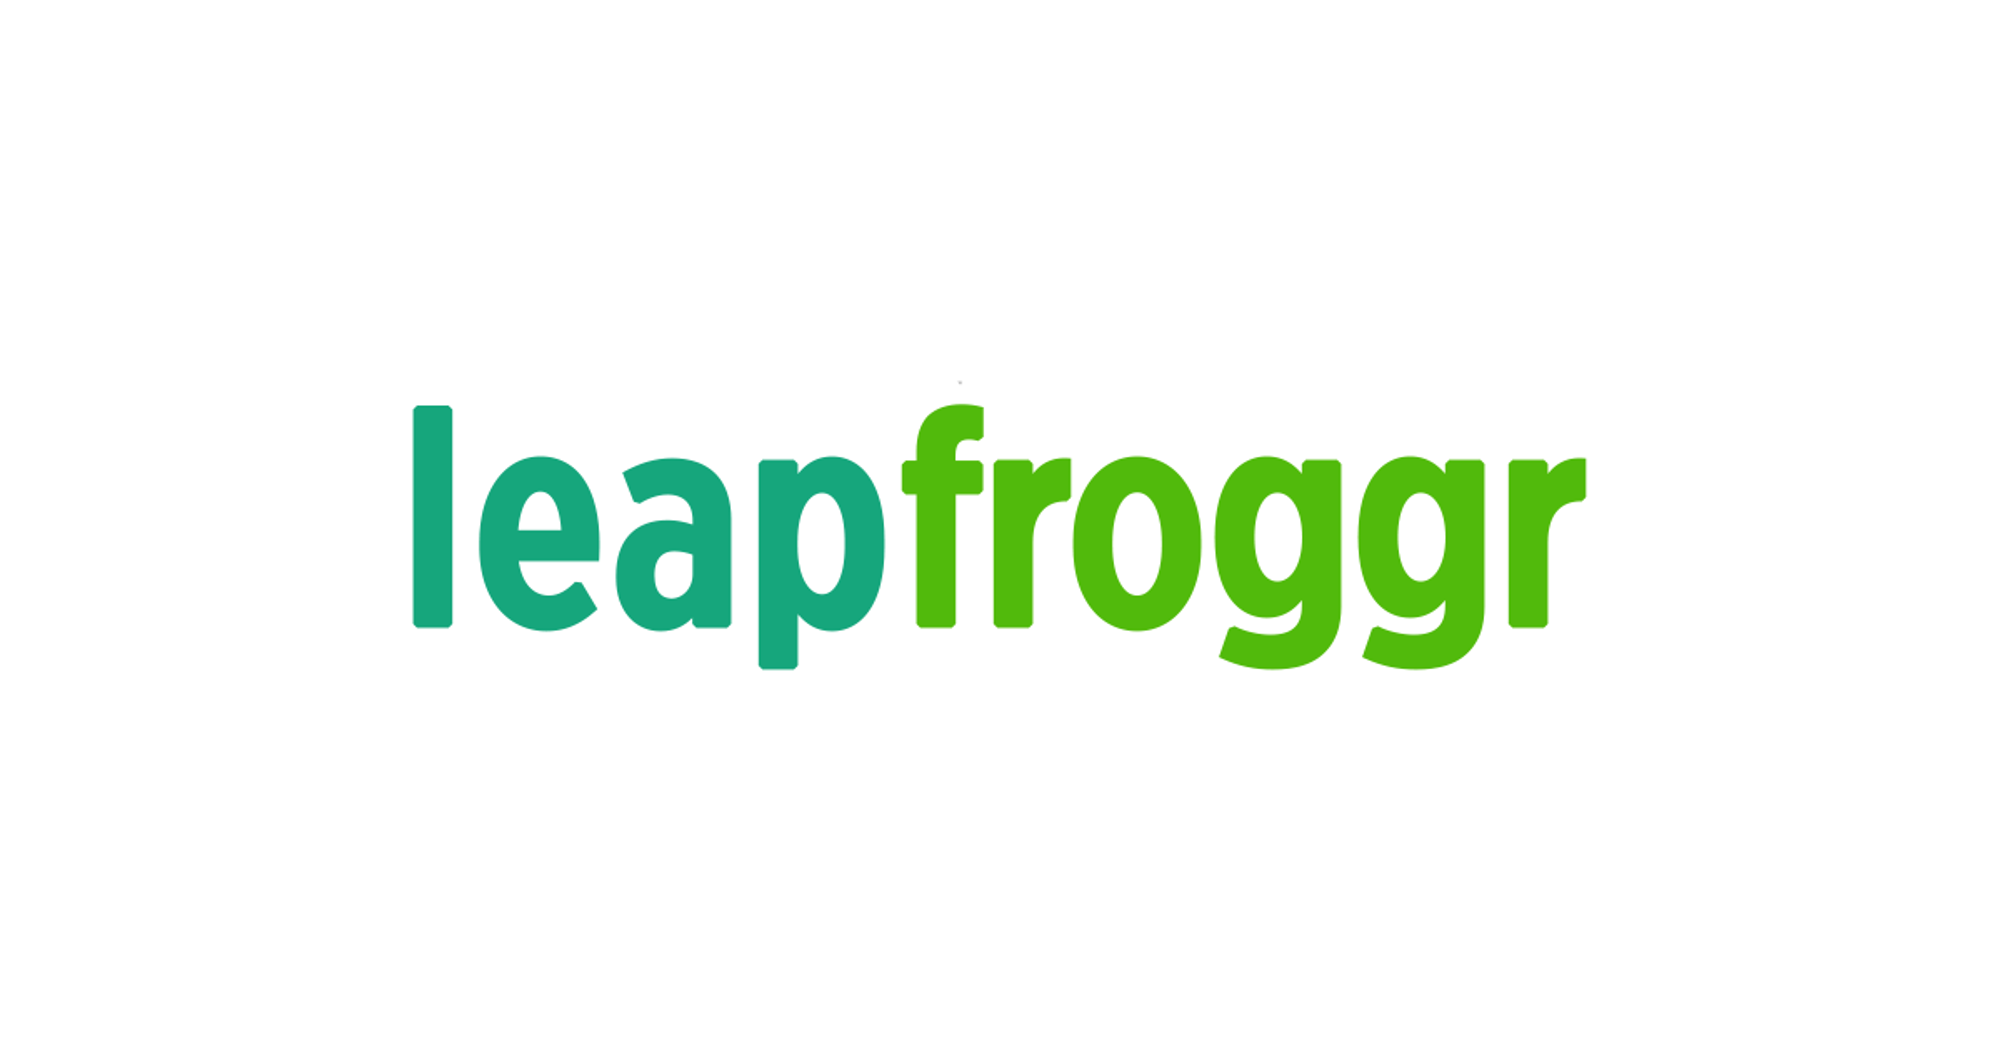 Software Architect at LeapFroggr Inc.